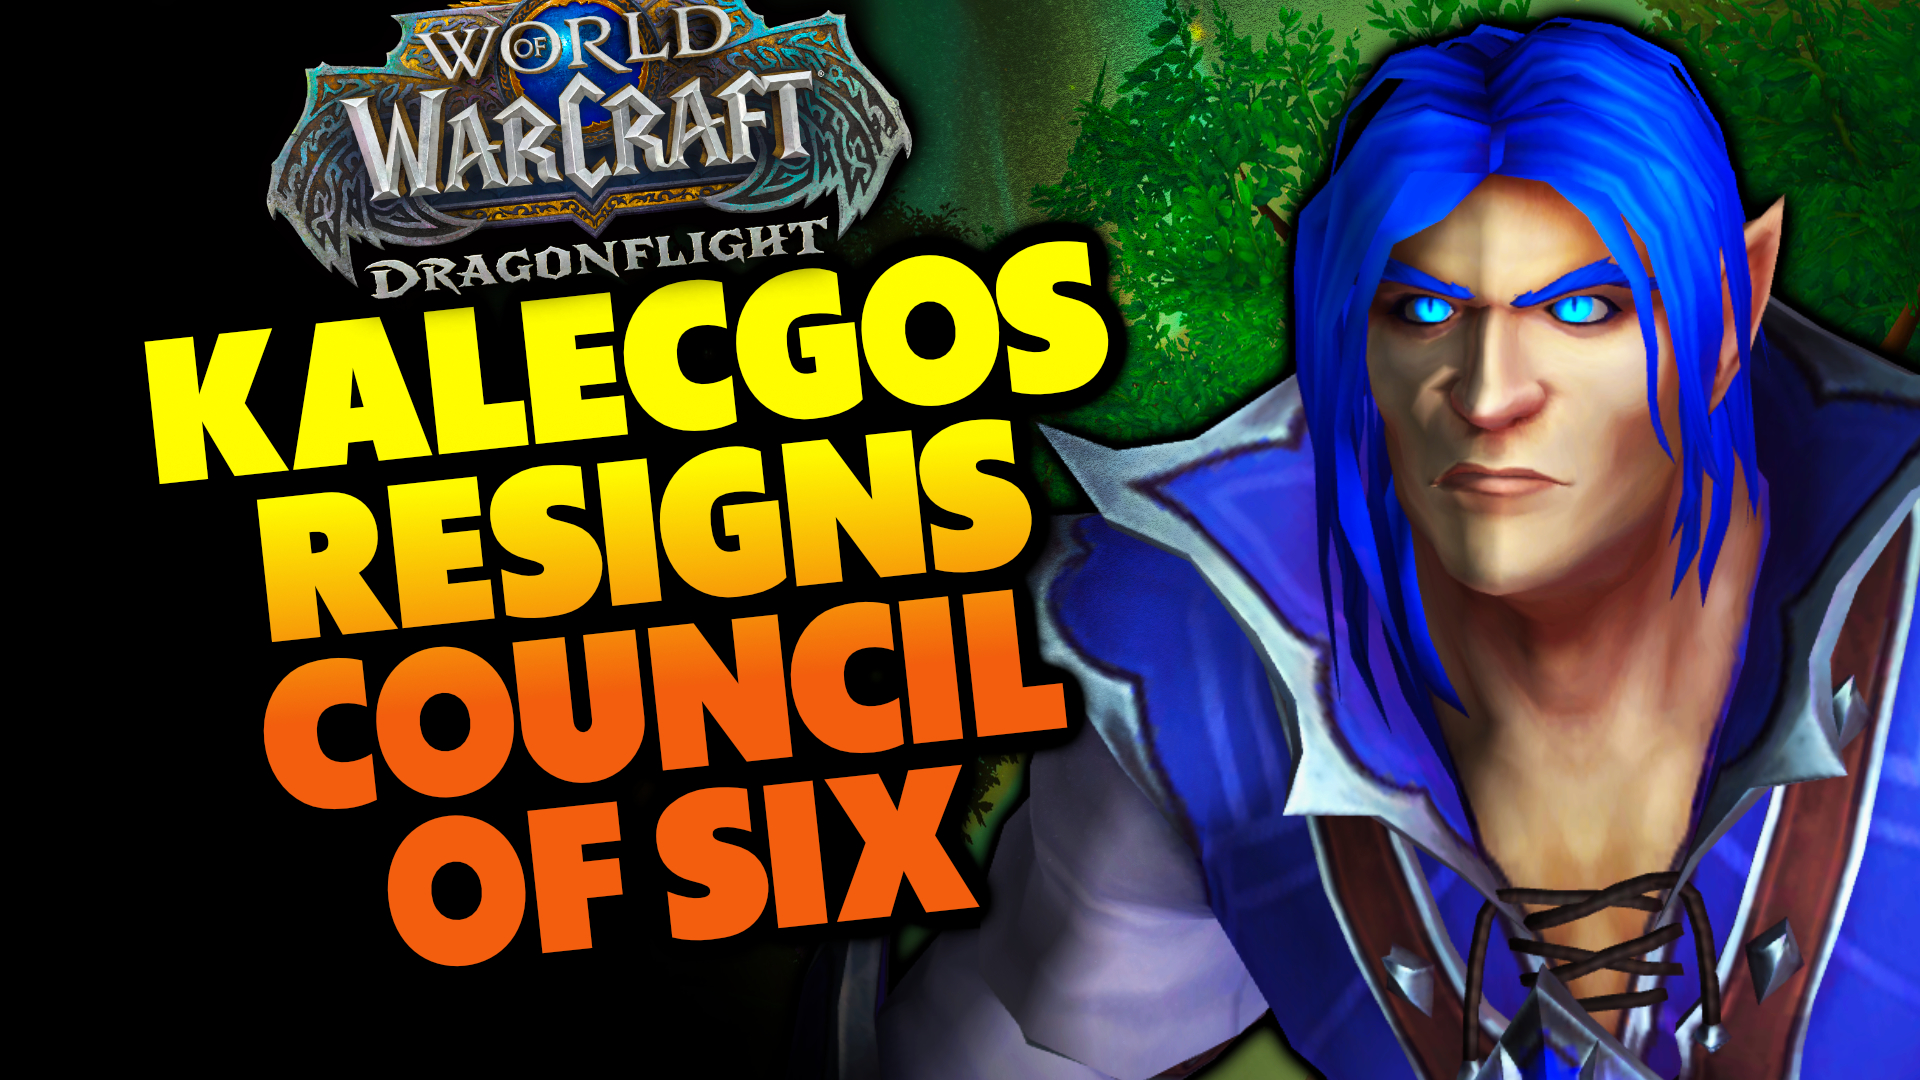 Kalecgos resigns the Council of Six